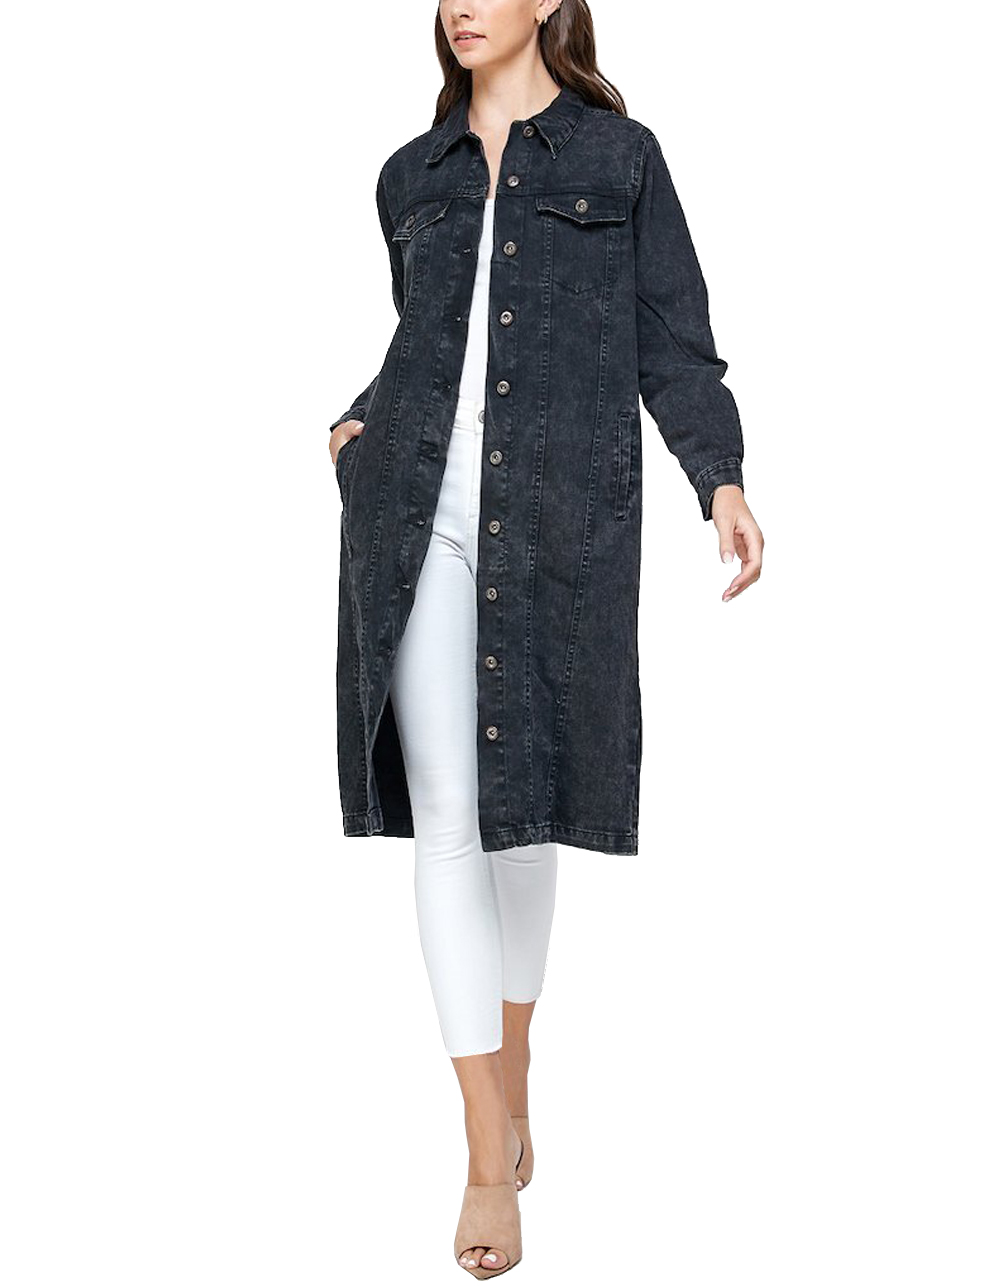 Women's Long Casual Maxi Length Denim Cotton Coat Oversize Button Up Jean Jacket (Mineral Black, M) - image 2 of 6